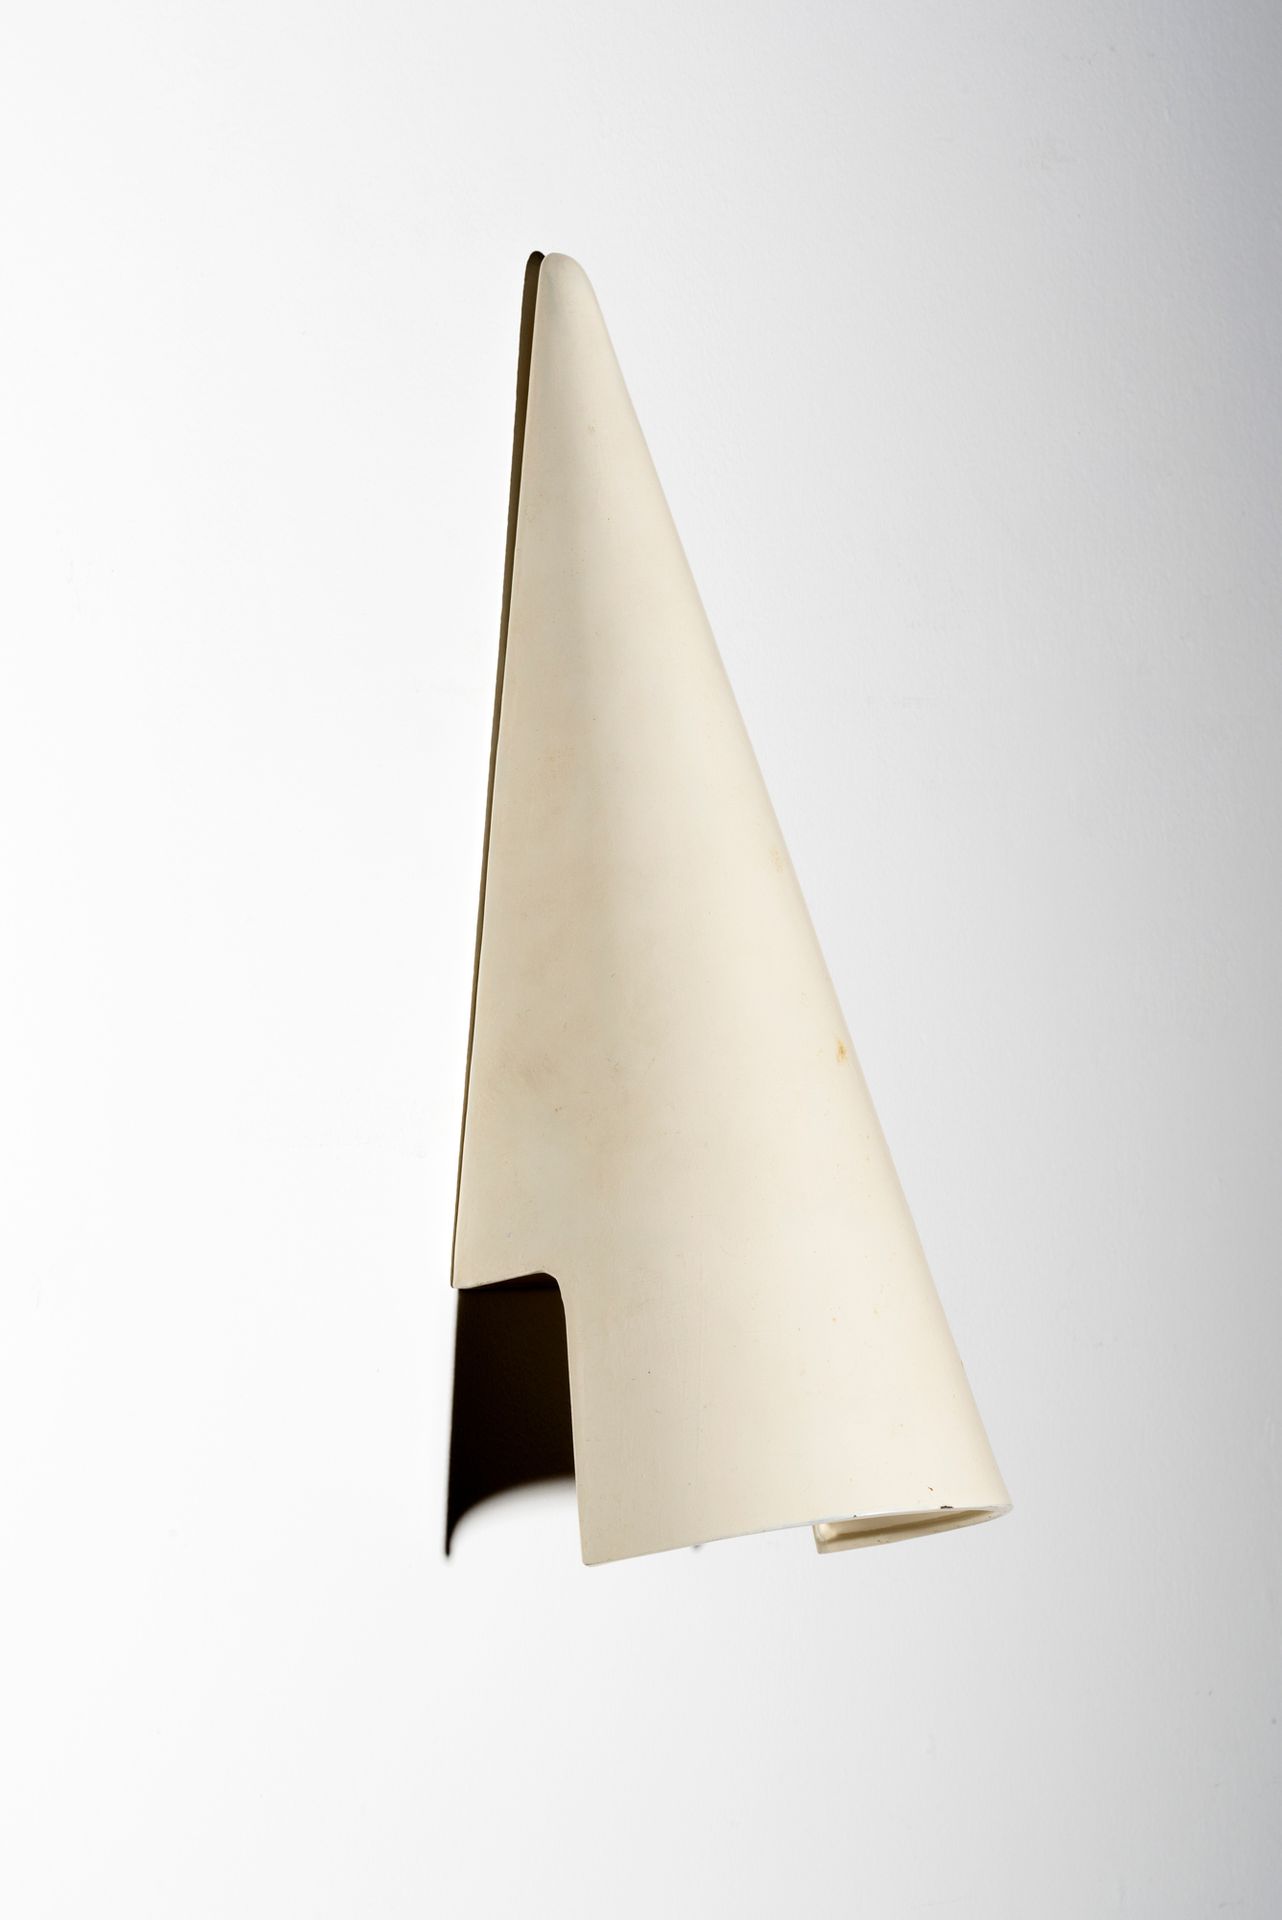 Alvar Aalto (1898-1976) 7239
Lámpara de pared
Metal lacado.
Wandlamp
Gelakt meta&hellip;